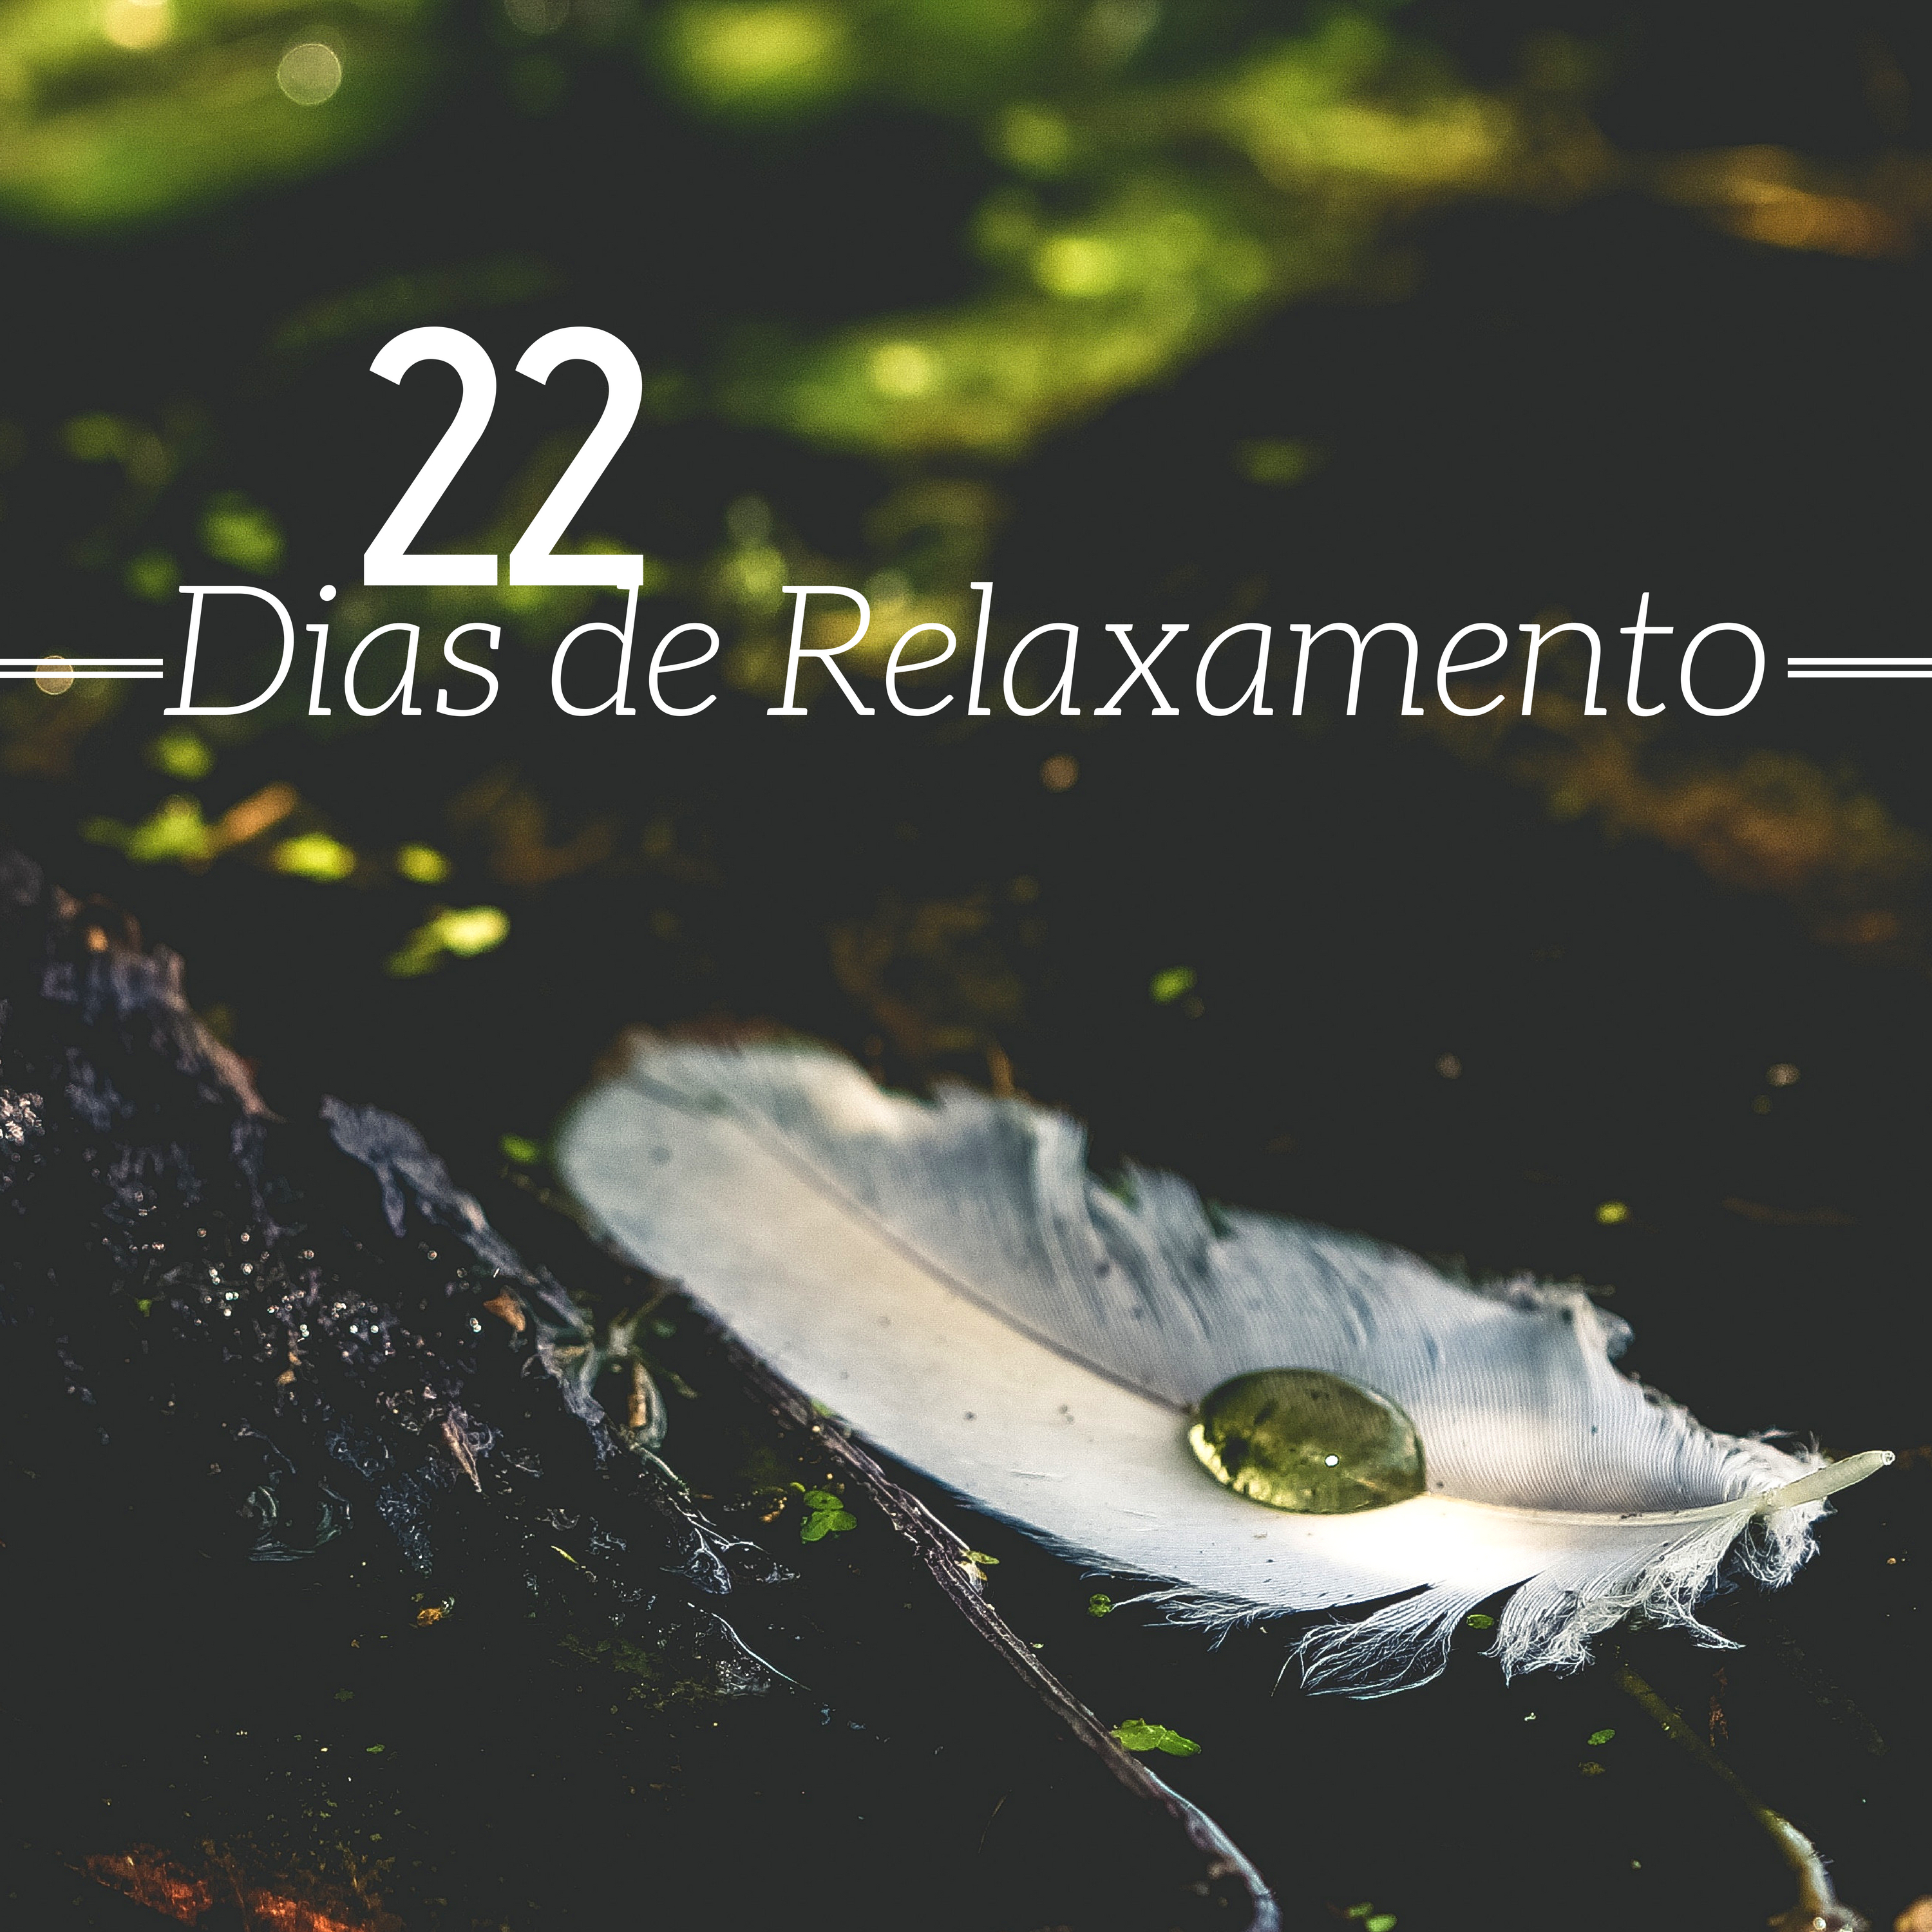 22 Dias de Relaxamento  Mu sica relaxante para o seu crescimento espiritual, mu sica relaxante para a mente e o corpo